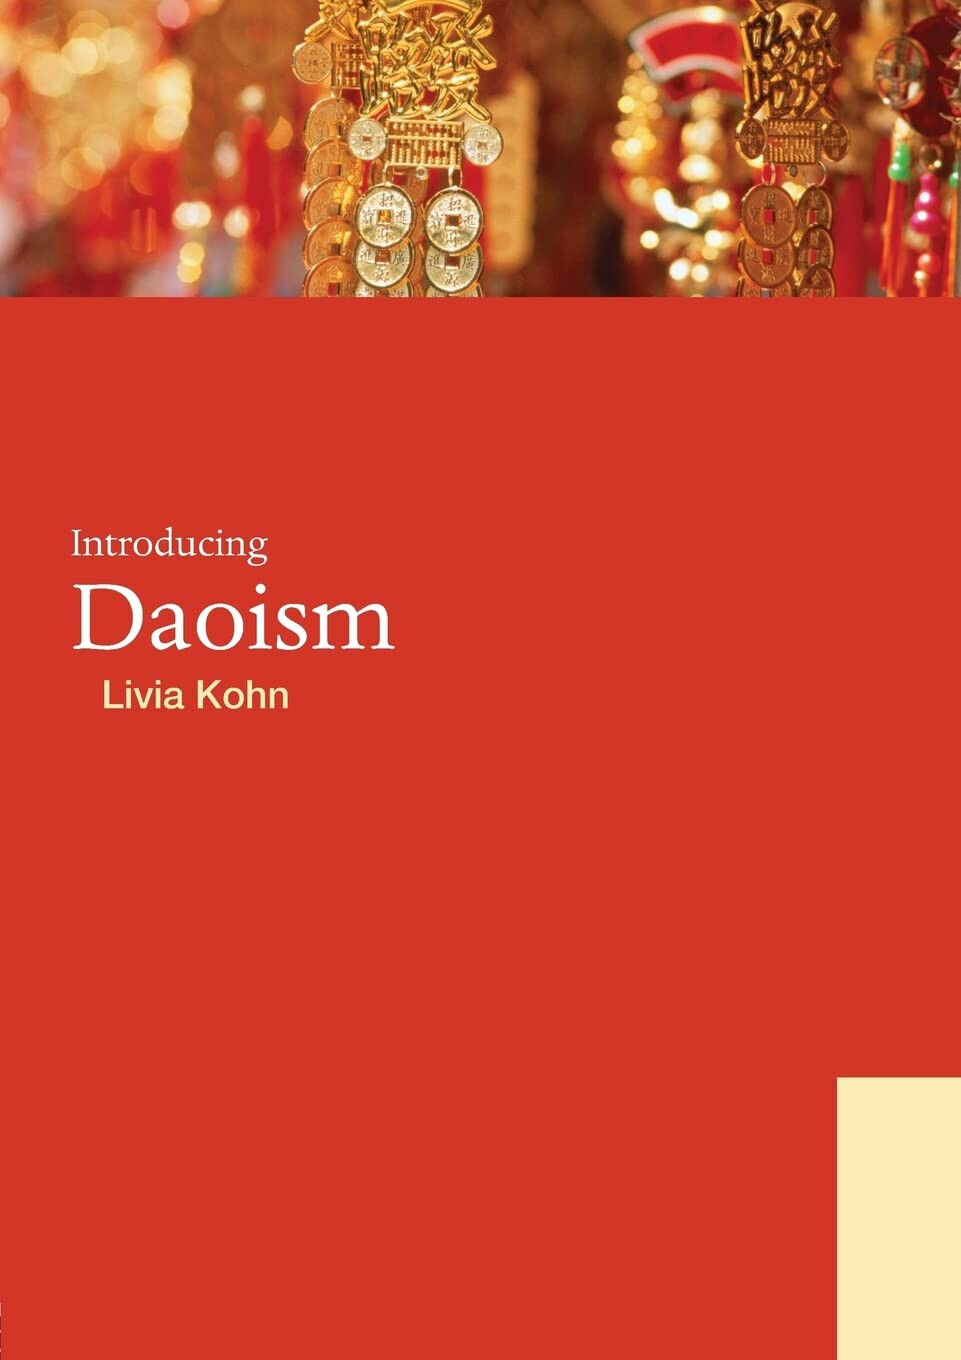 Introducing Daoism - Livia Kohn - Routledge, 2008